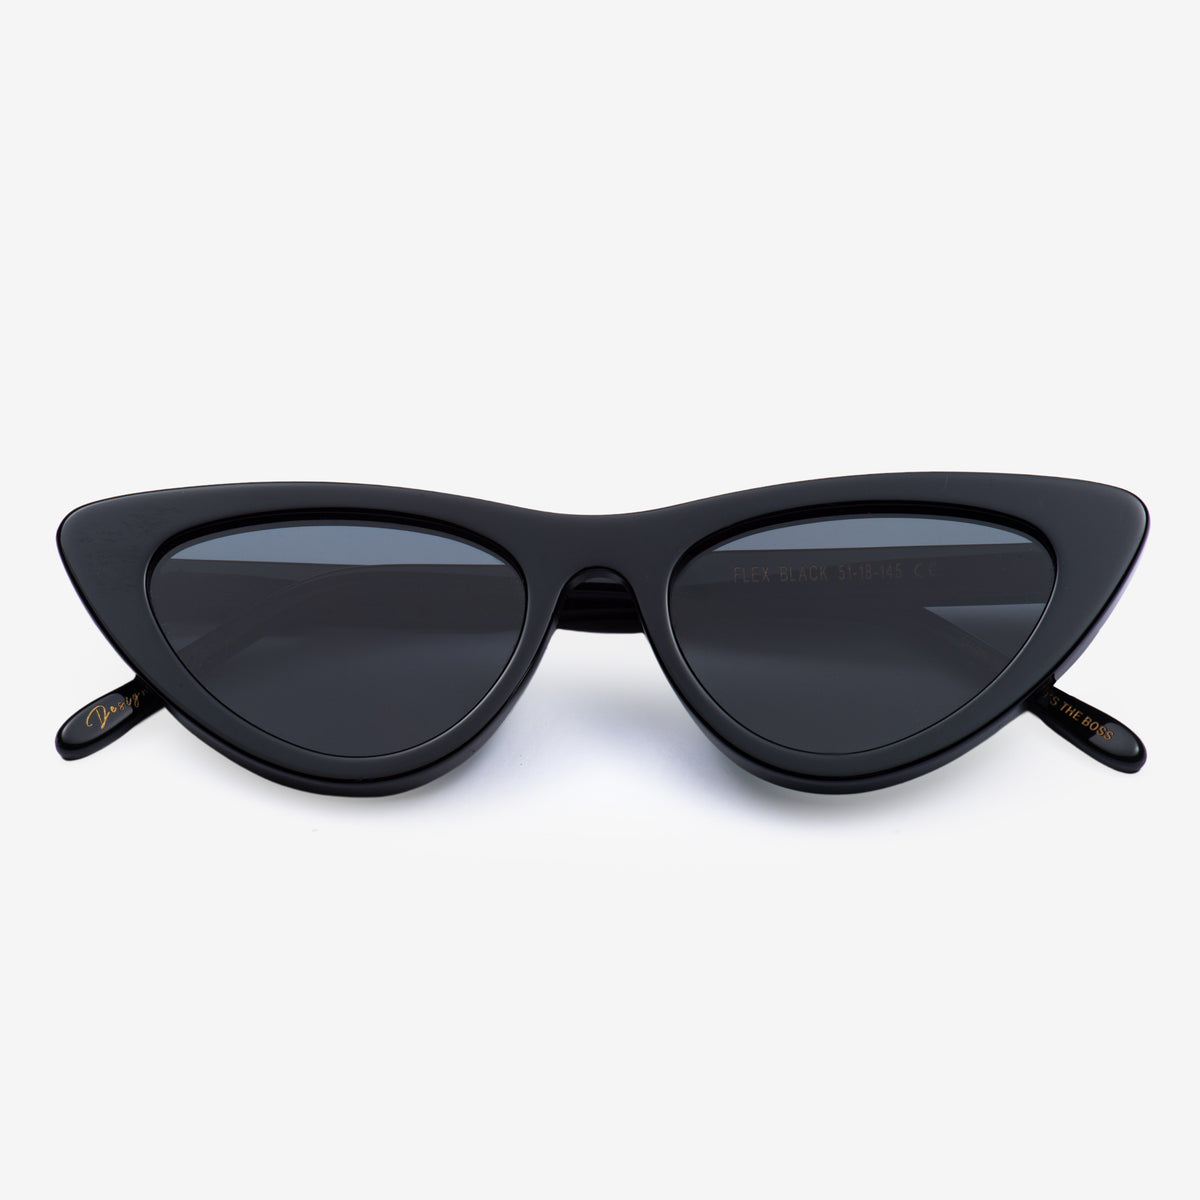 De-sunglasses| Fez black | Sunglasses for men and women